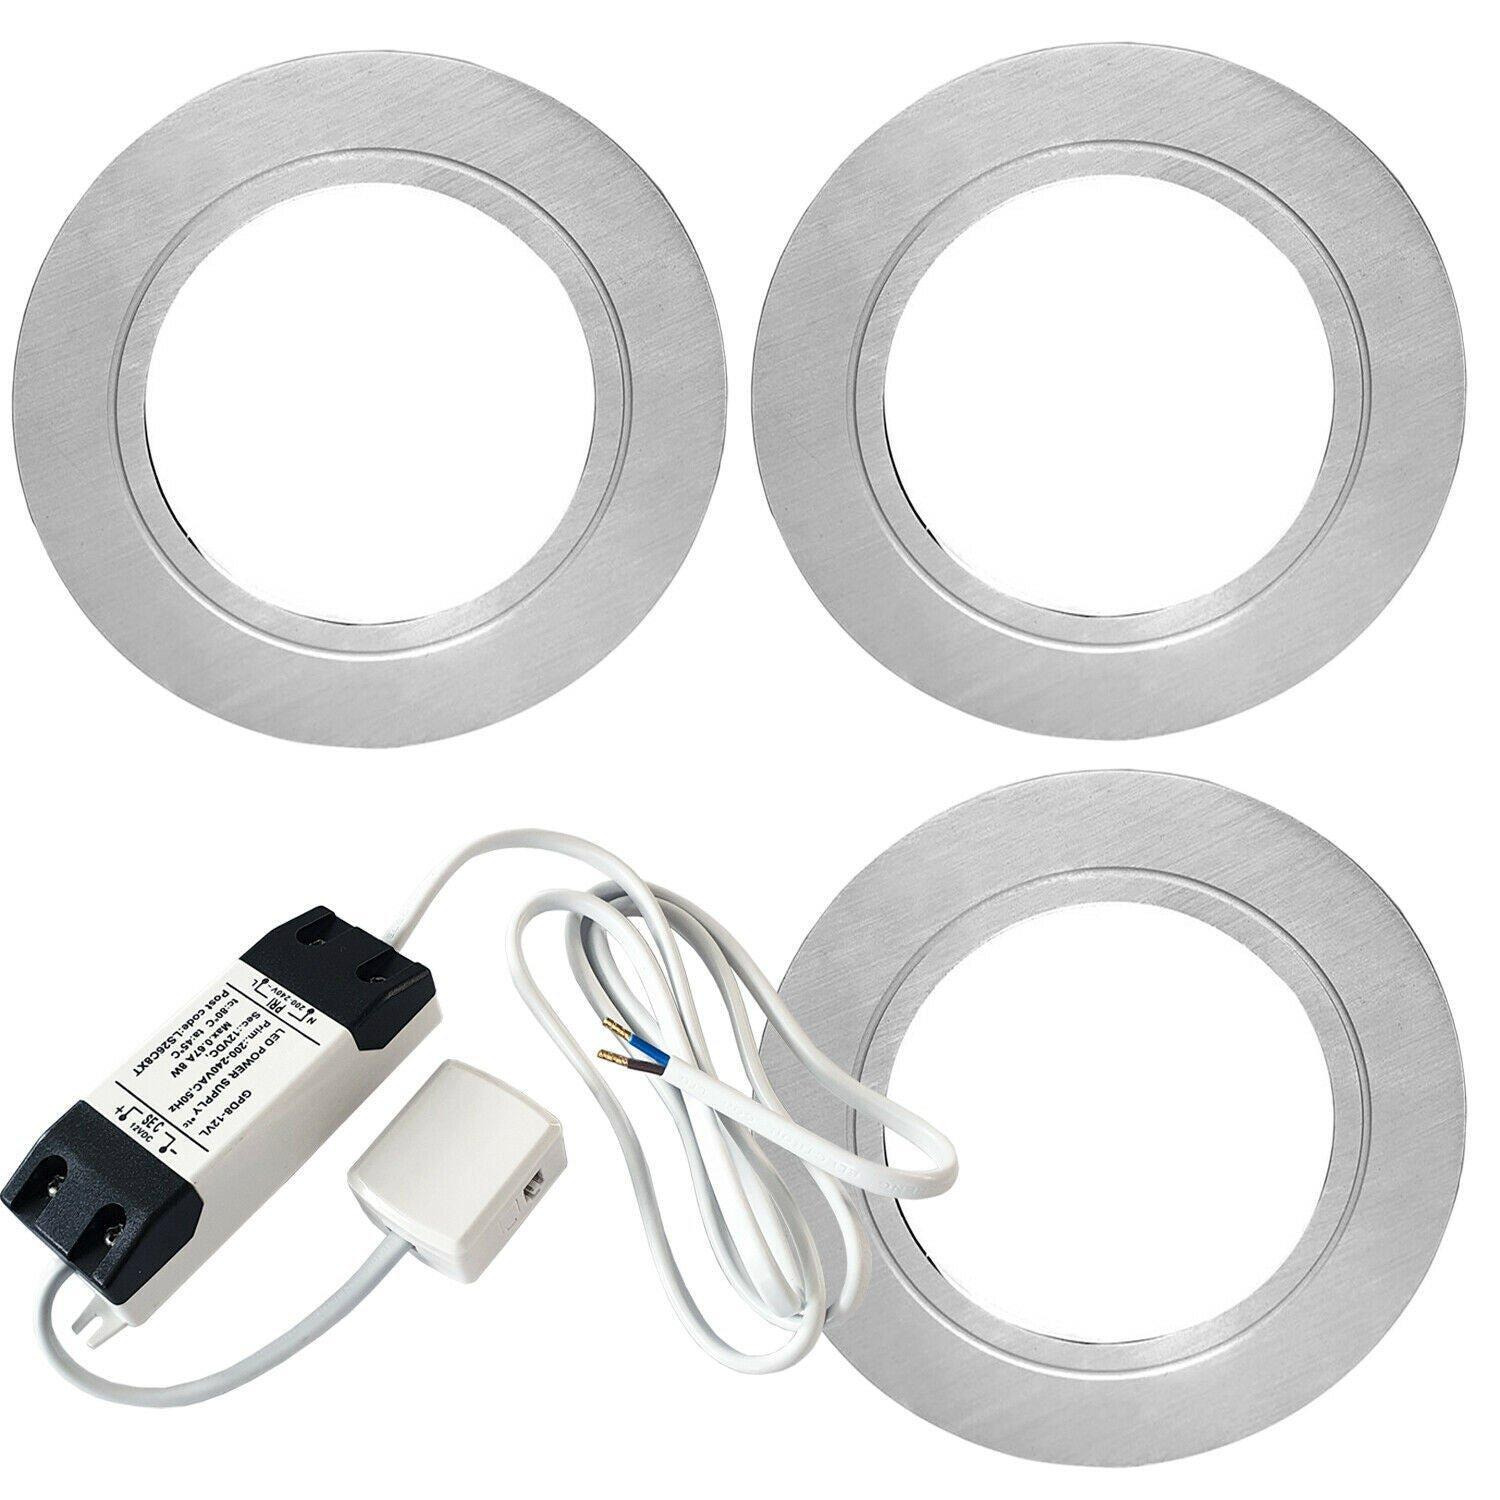 3x CHROME Round Flush Under Cabinet Kitchen Light & Driver Kit - Natural White LED - image 1